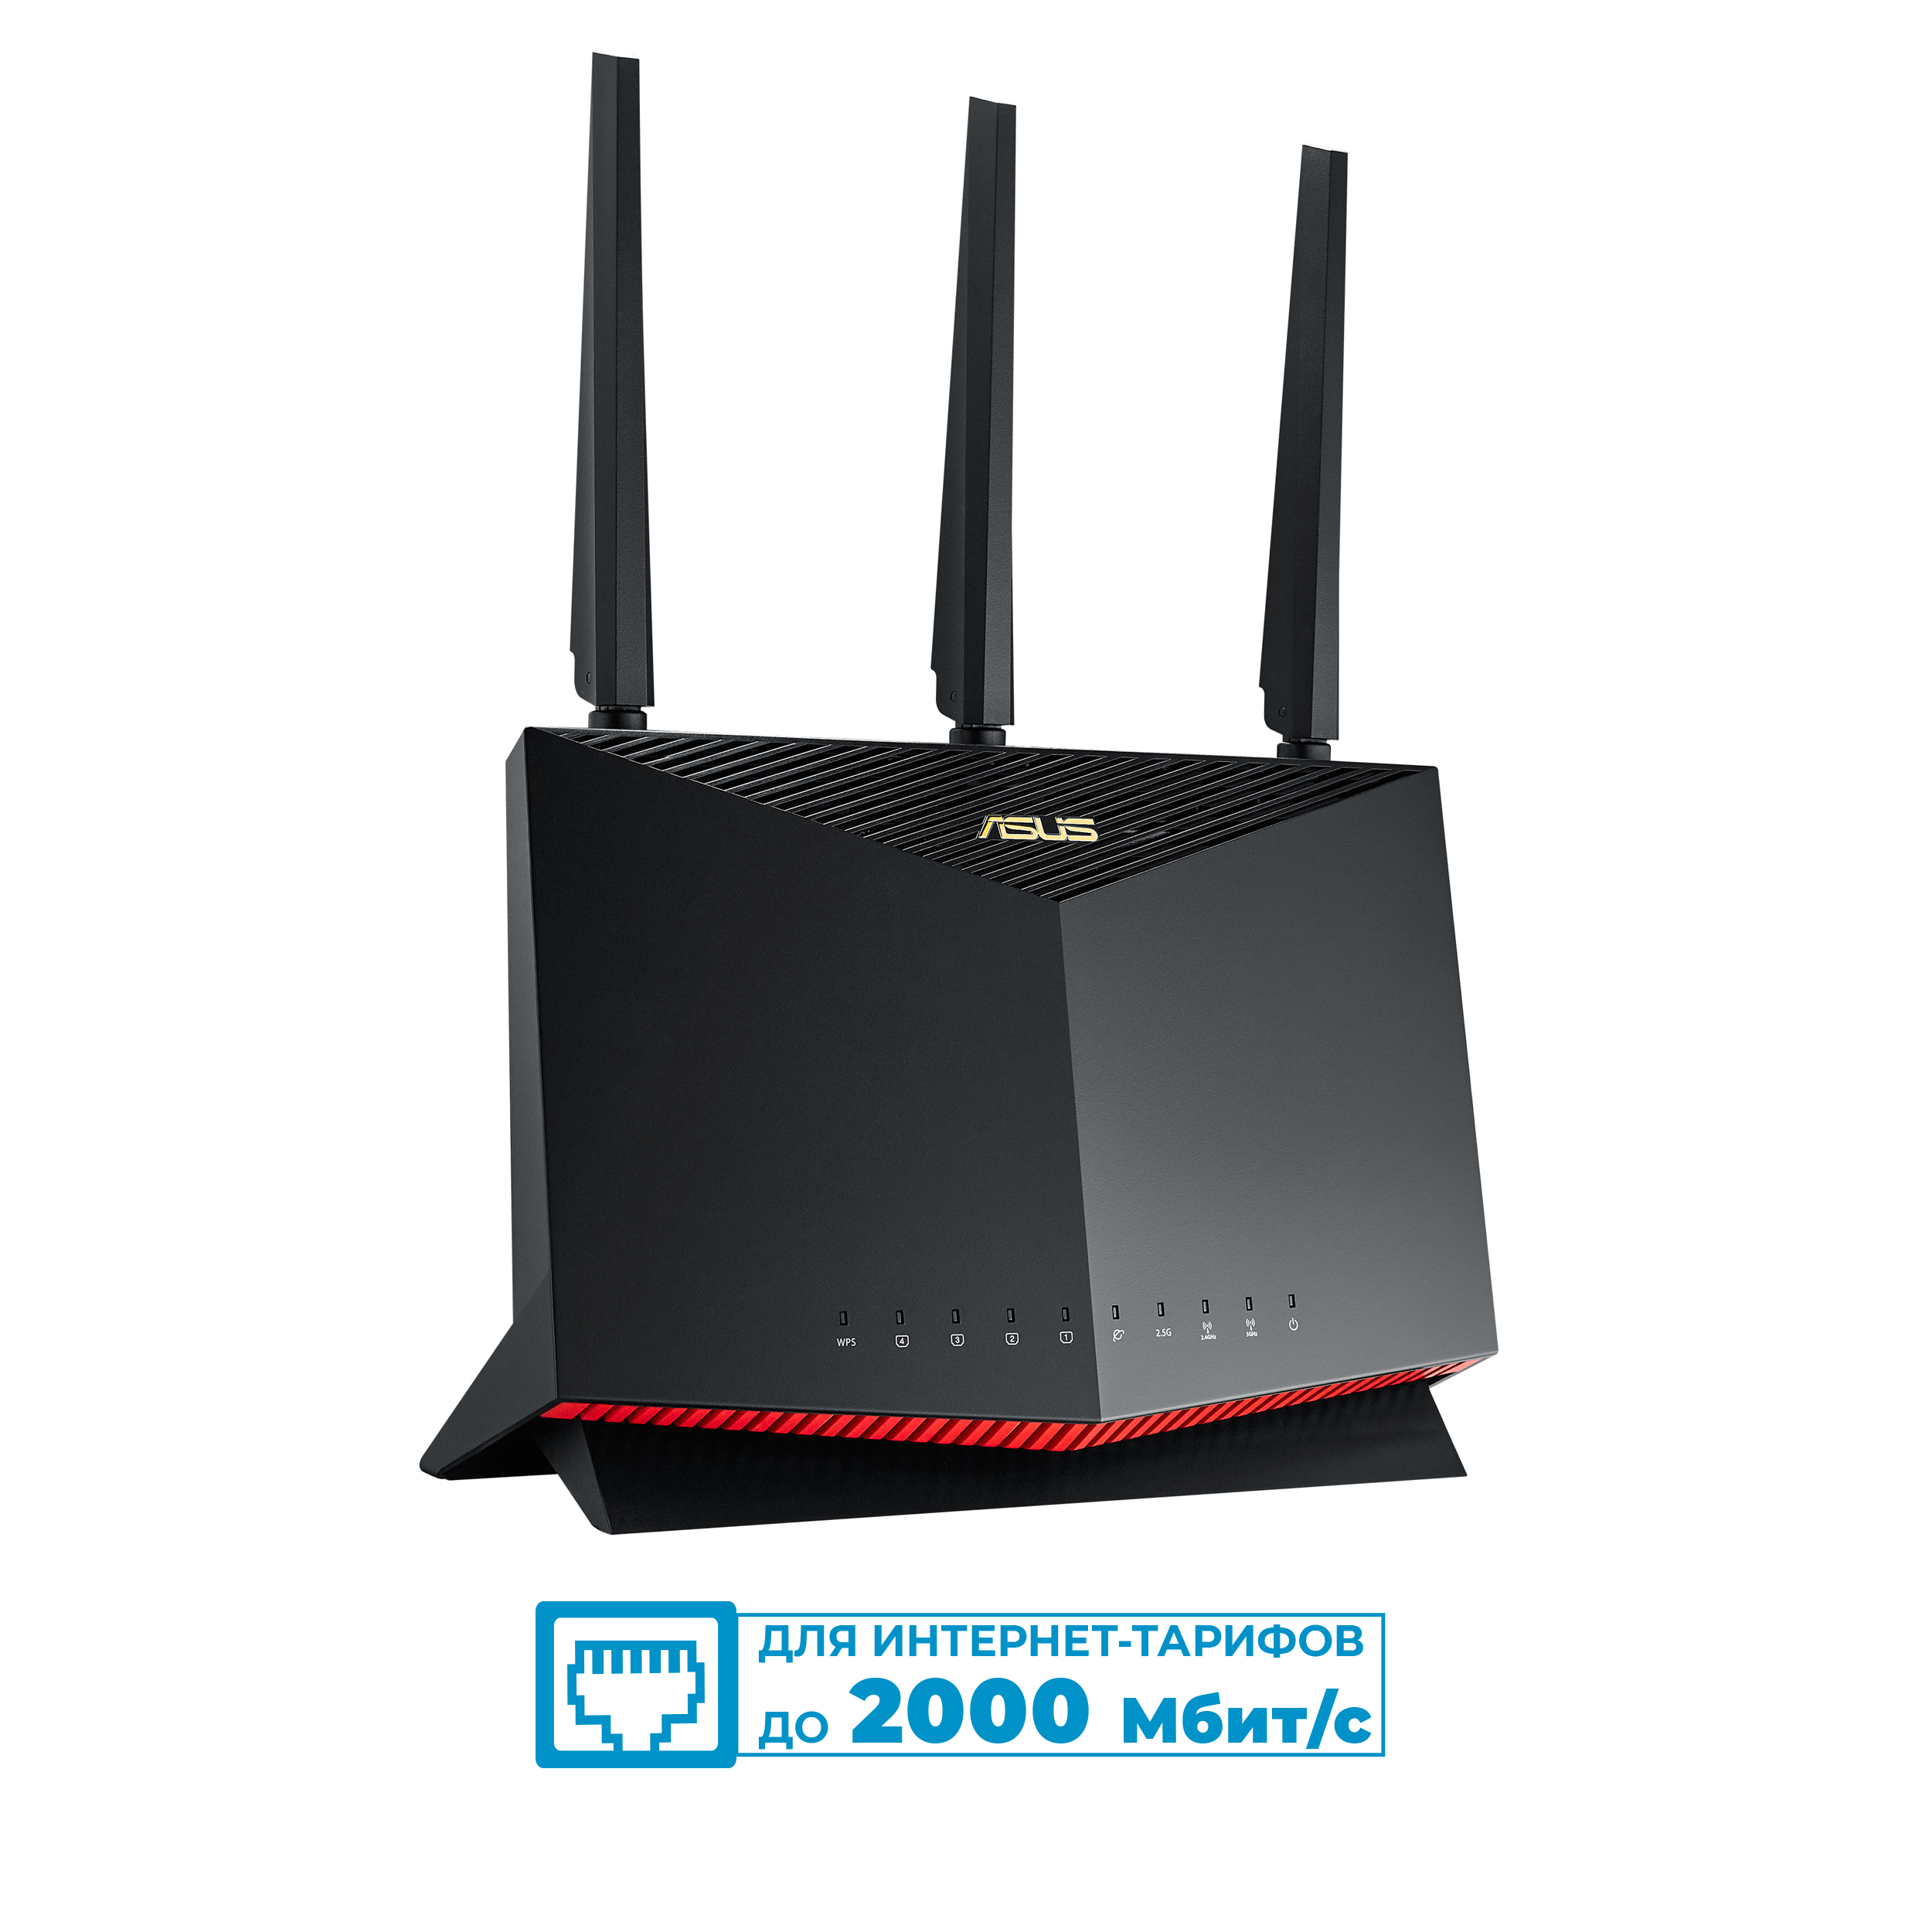 Wi-Fi роутер ASUS RT-AX86U PRO, 802.11a/b/g/n/ac/ax, 2.4 / 5 ГГц, до 5.67 Гбит/с, LAN 4x1 Гбит/с, WAN 1x2.5 Гбит/с, внешних антенн: 3, внутренних антенн: 1, 1xUSB 2.0, 1xUSB 3.0 (90IG07N0-MU2B00)